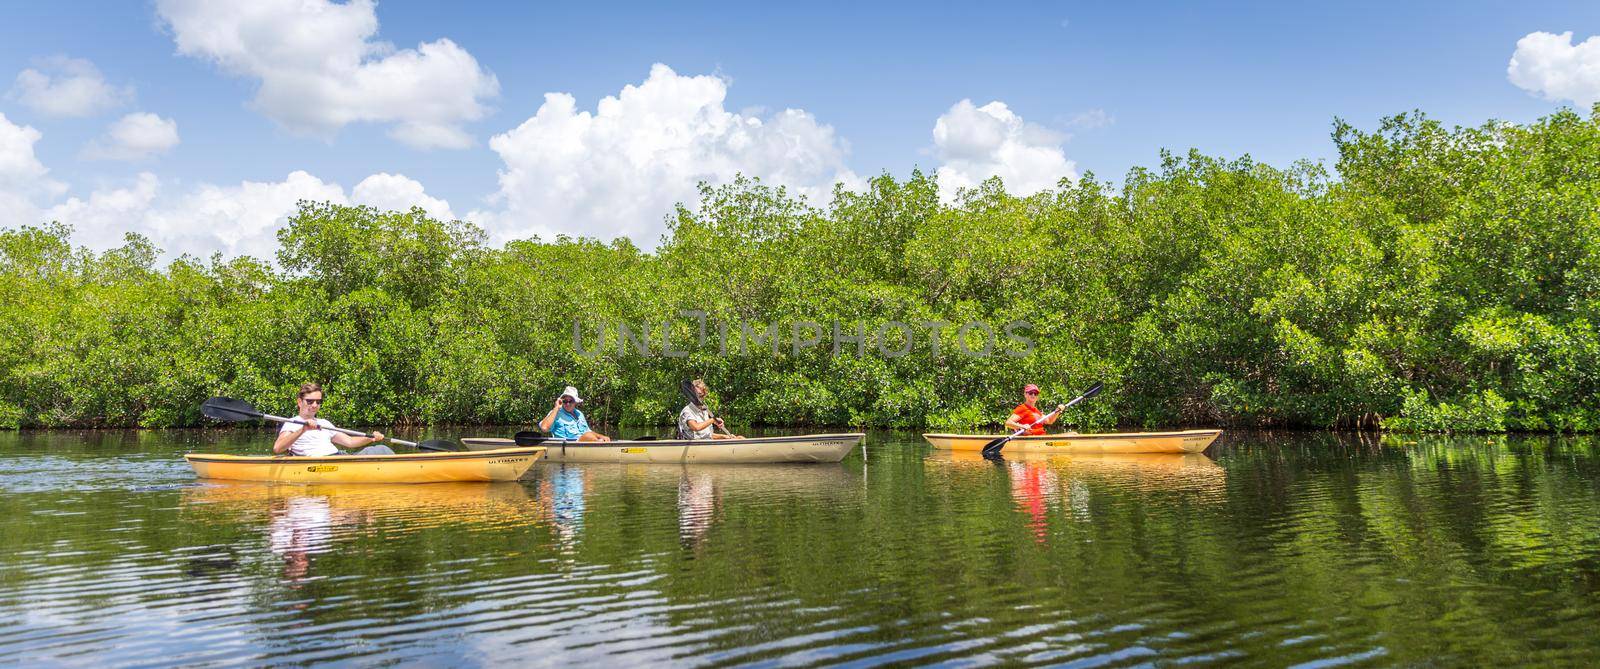 EVERGLADES, FLORIDA, USA - AUGUST 31: Tourist kayaking in mangrove forest on August 31, 2014 in Everglades, Florida, USA